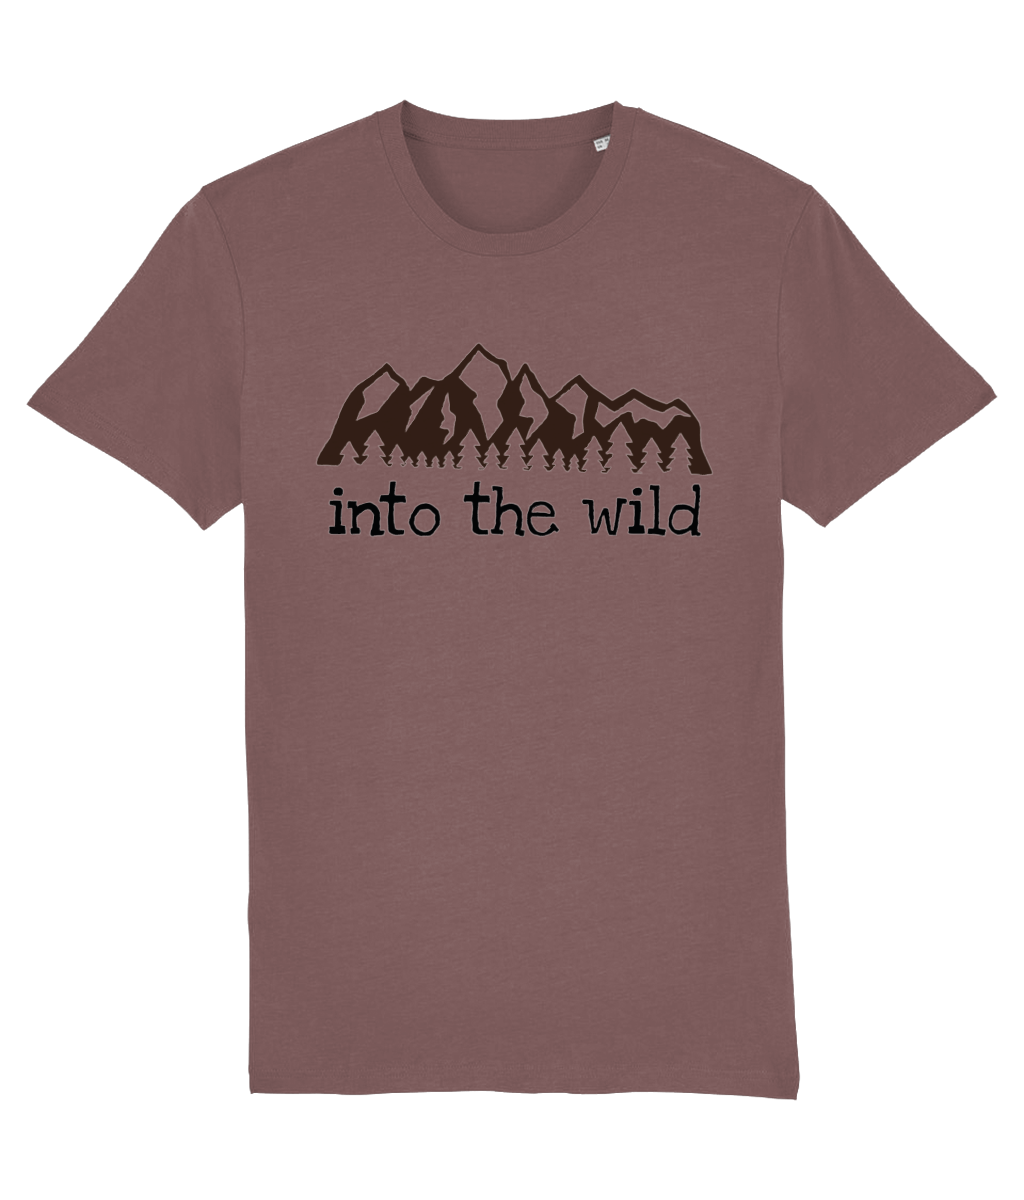 Wanderlust into the wild t-shirt